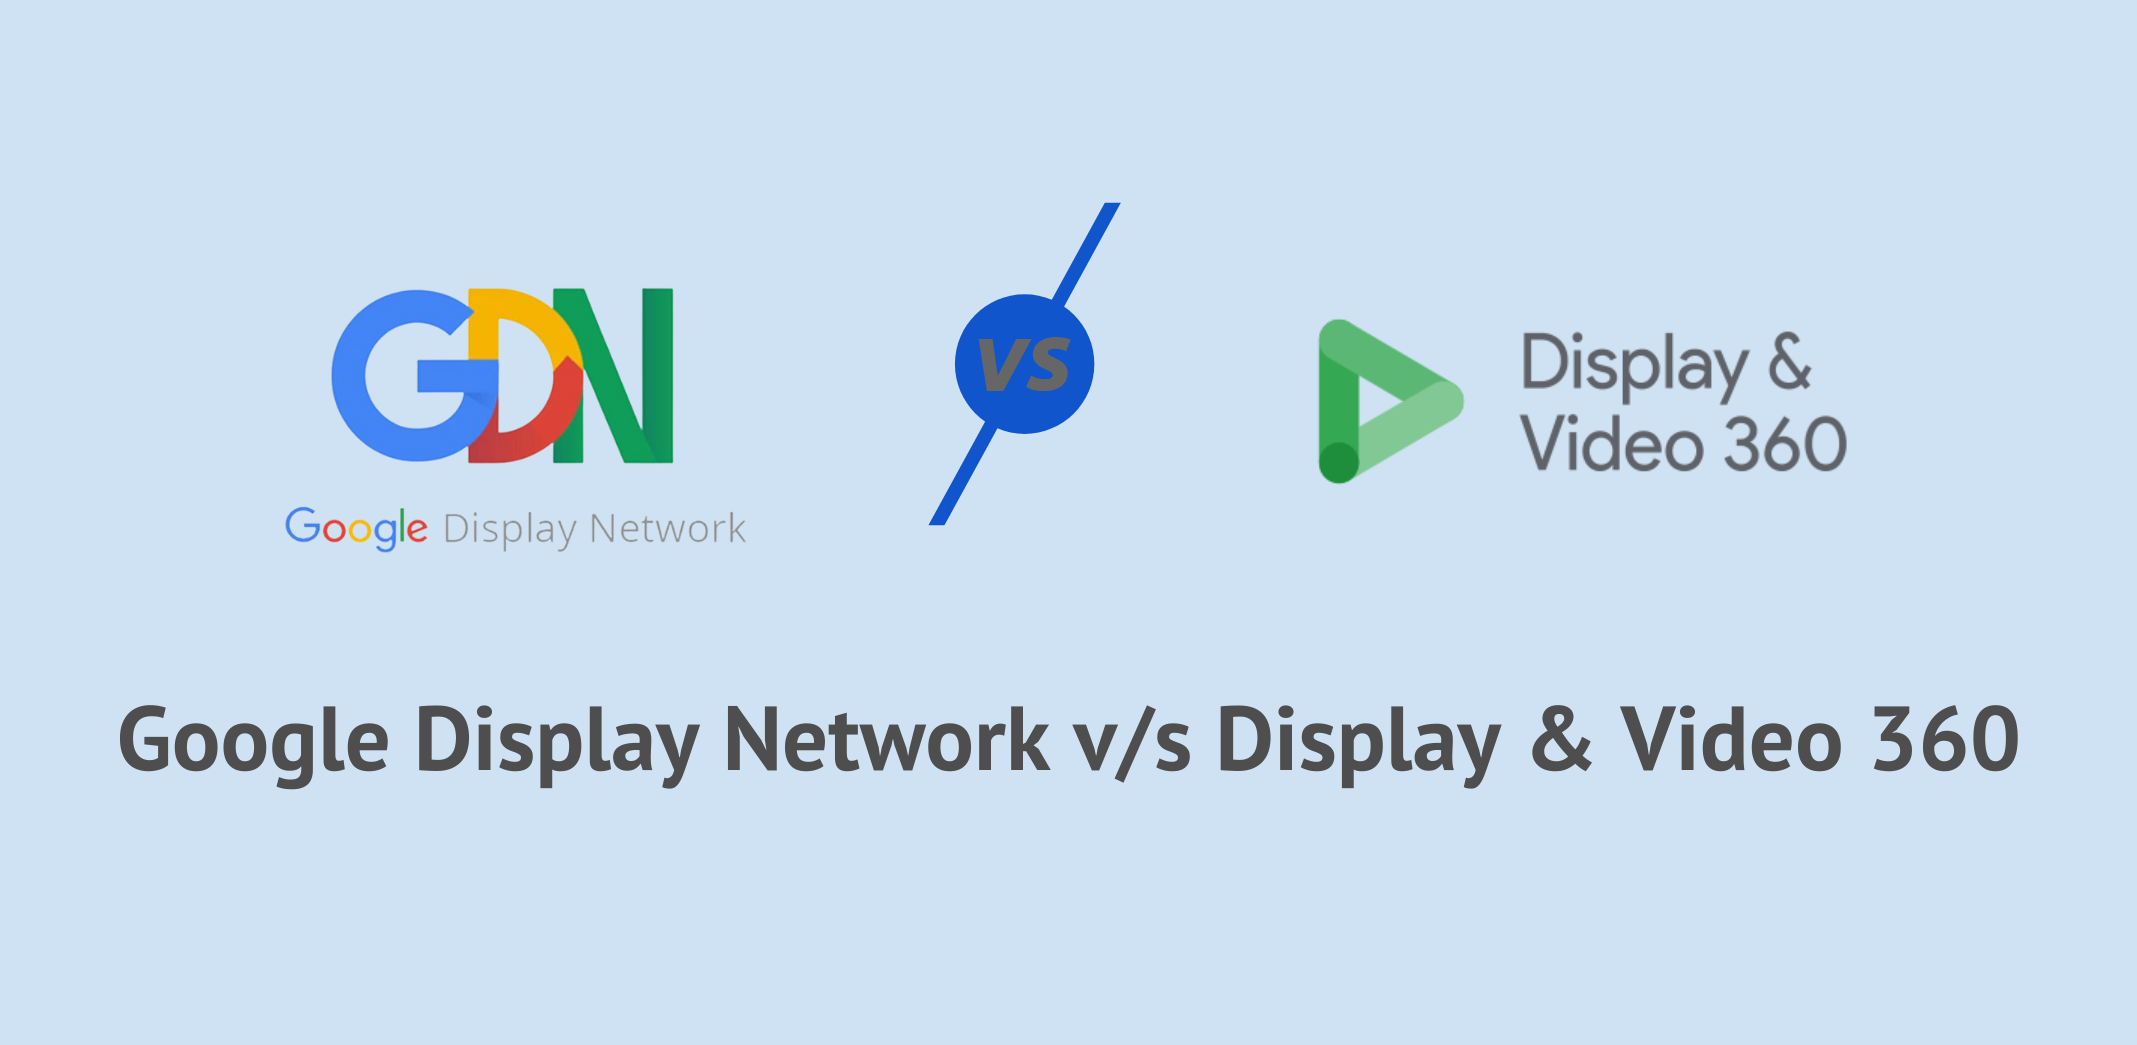 Google Display Network v/s Display